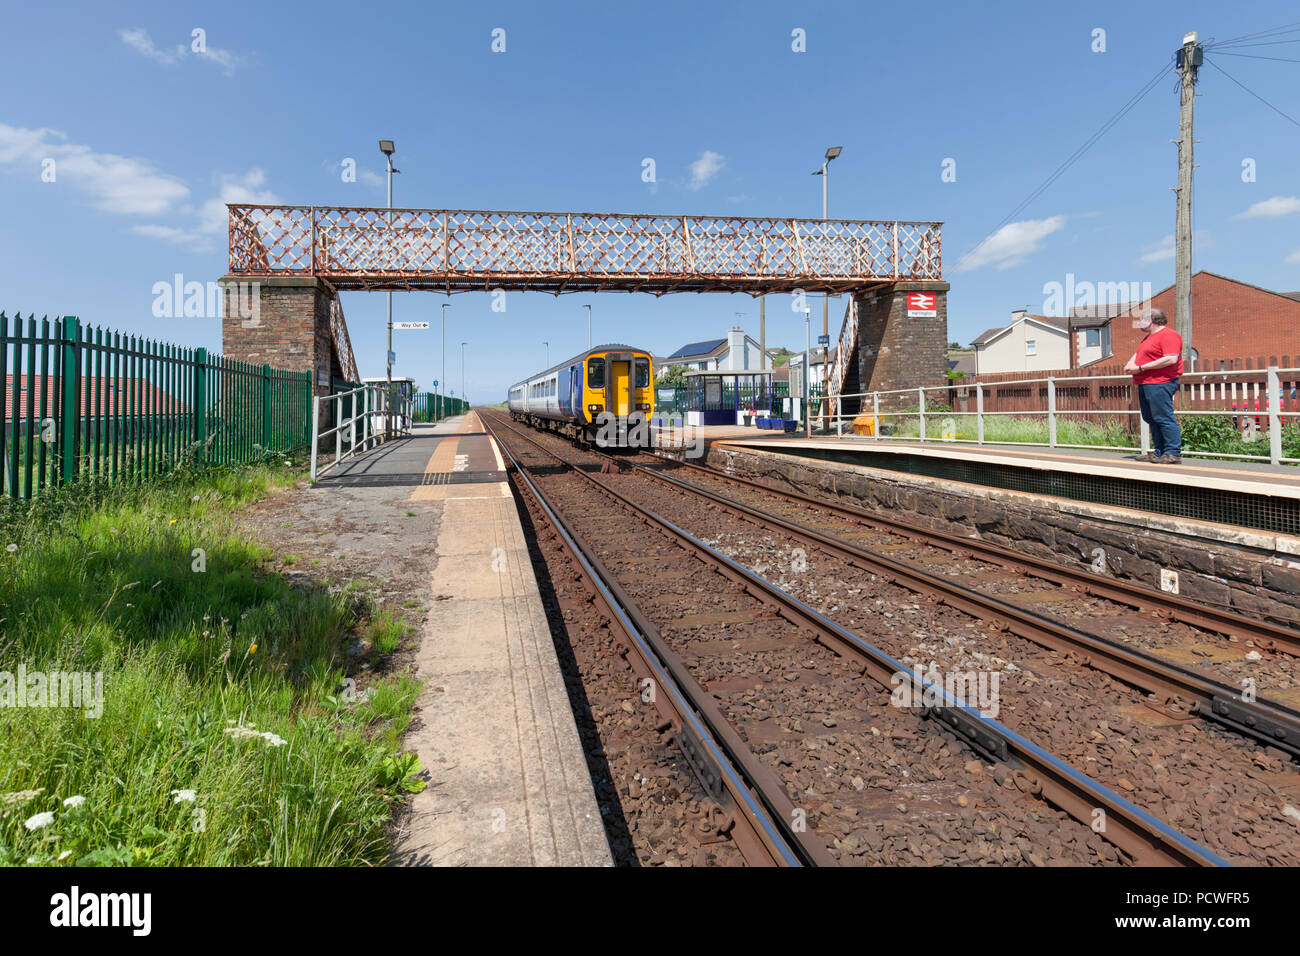 A Northern rail class 156 sprinter train at Harrington railway station on  the Cumbrian coast railway line with a Carlisle to Barrow in Furness train  Stock Photo - Alamy